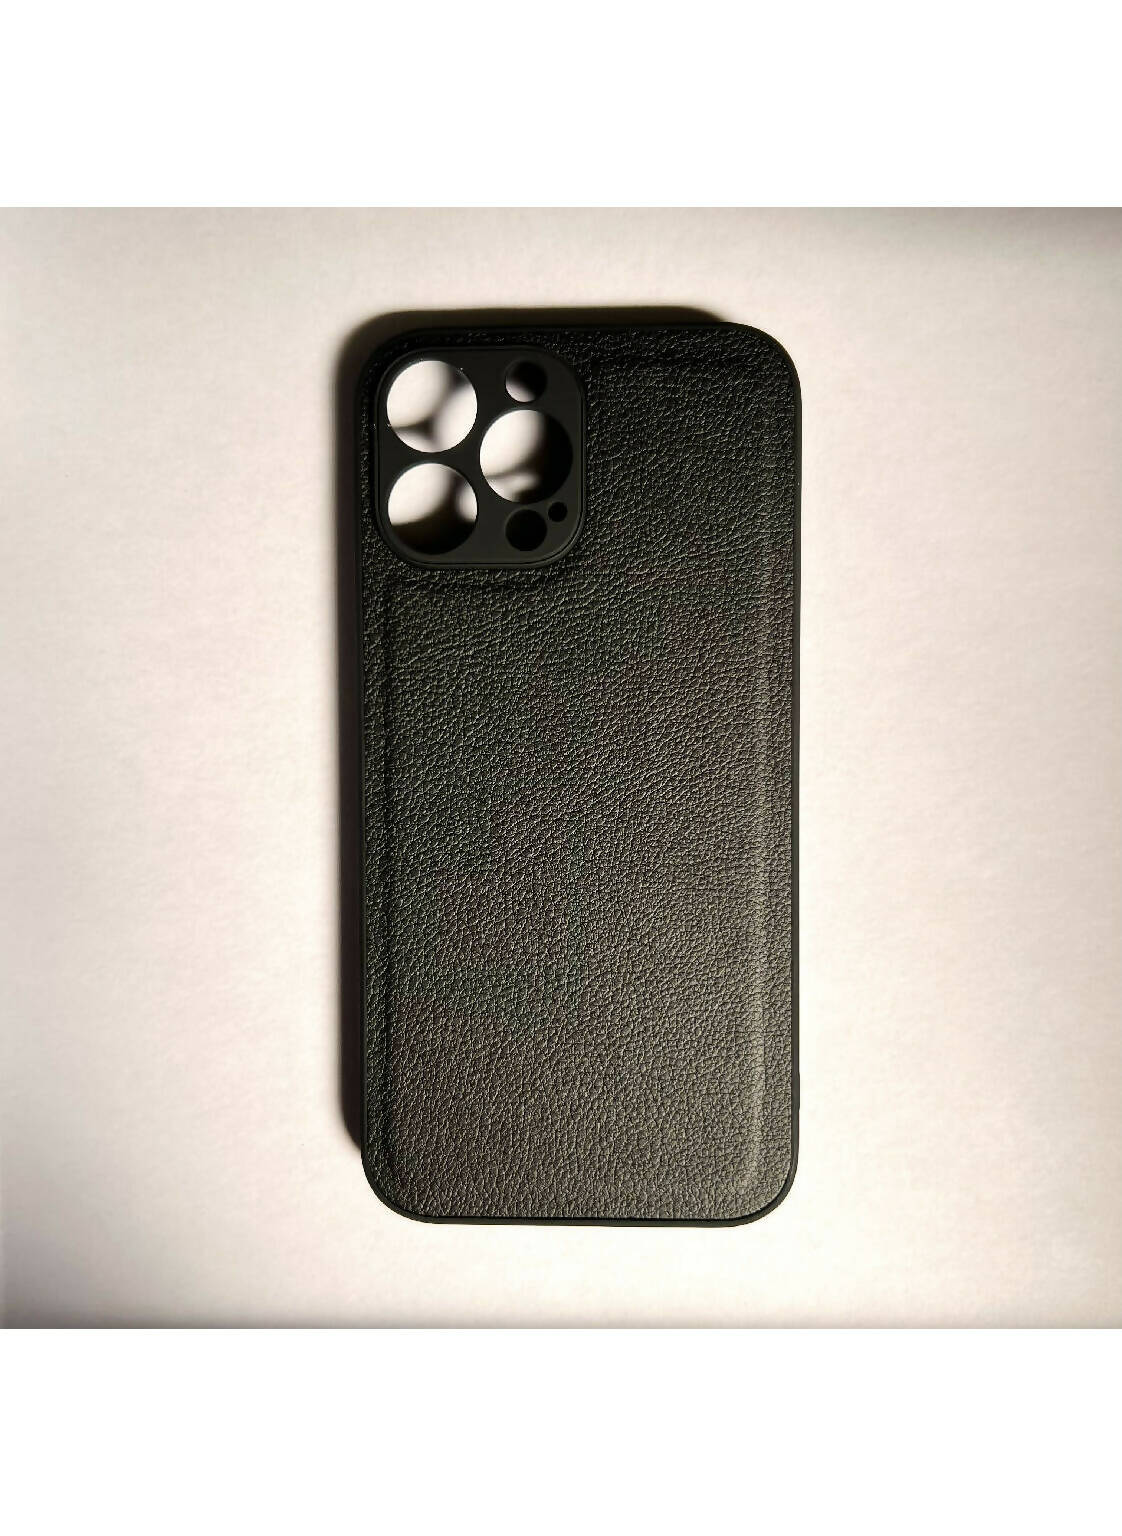 Lady iPhone Case - Black